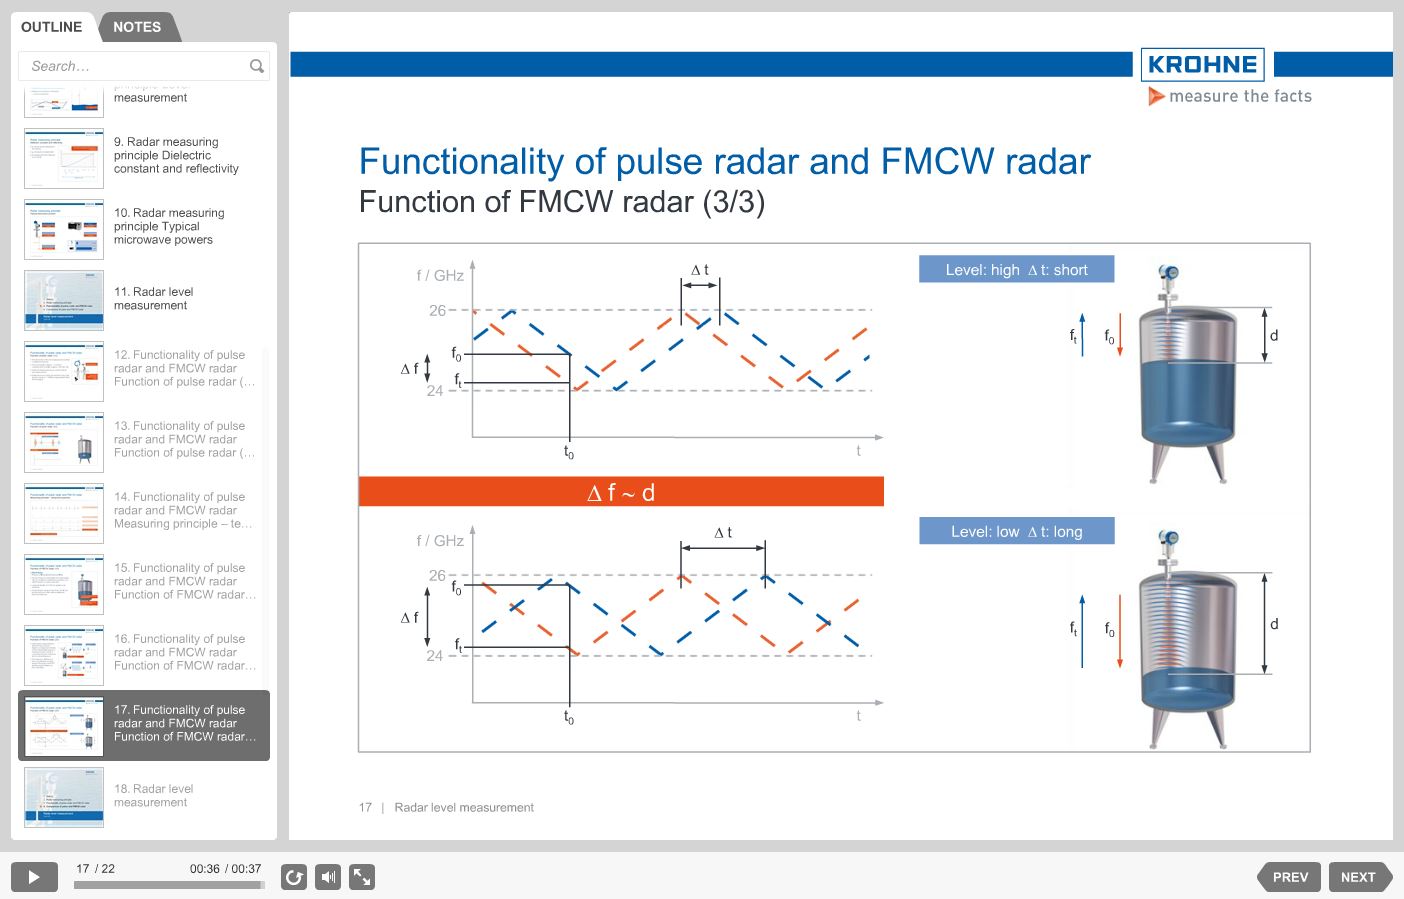 eLearning Radar Level Measurement – Function of FMCW radar 2